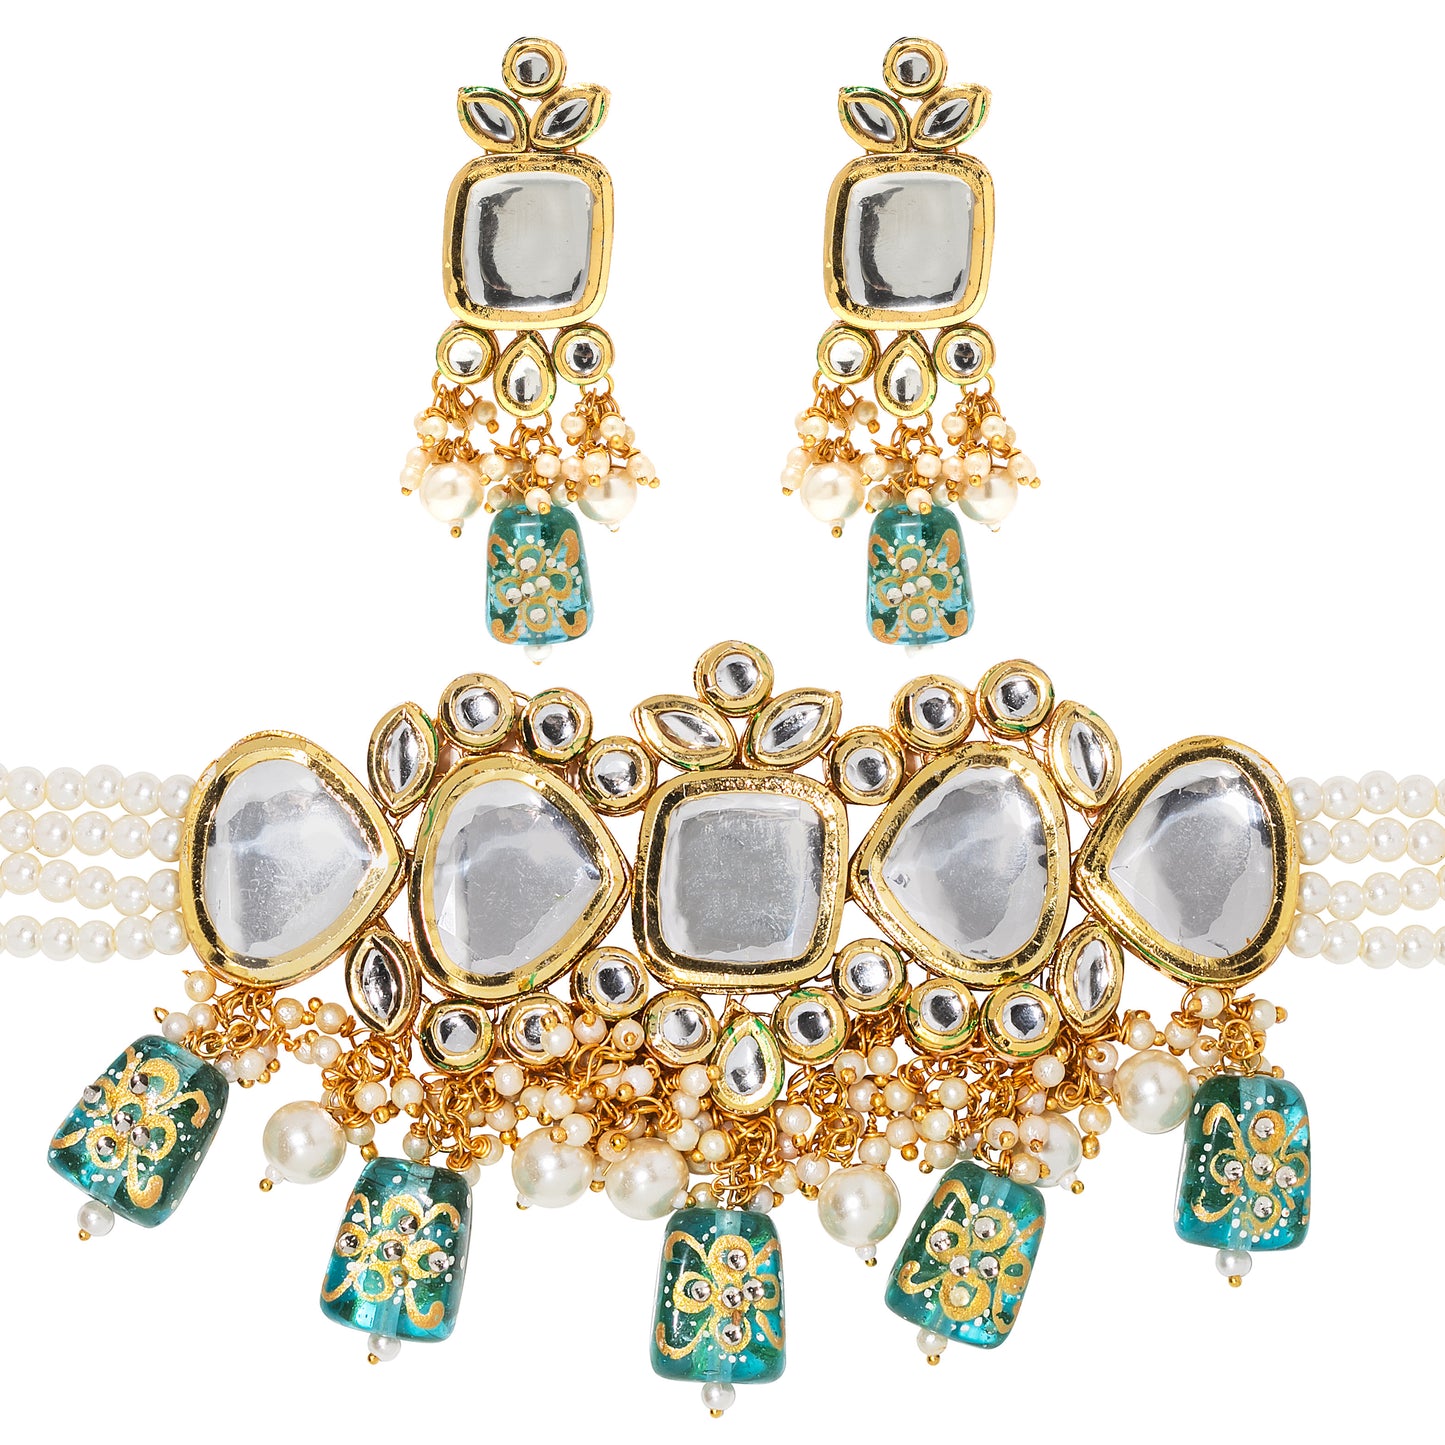 Dhara necklace set